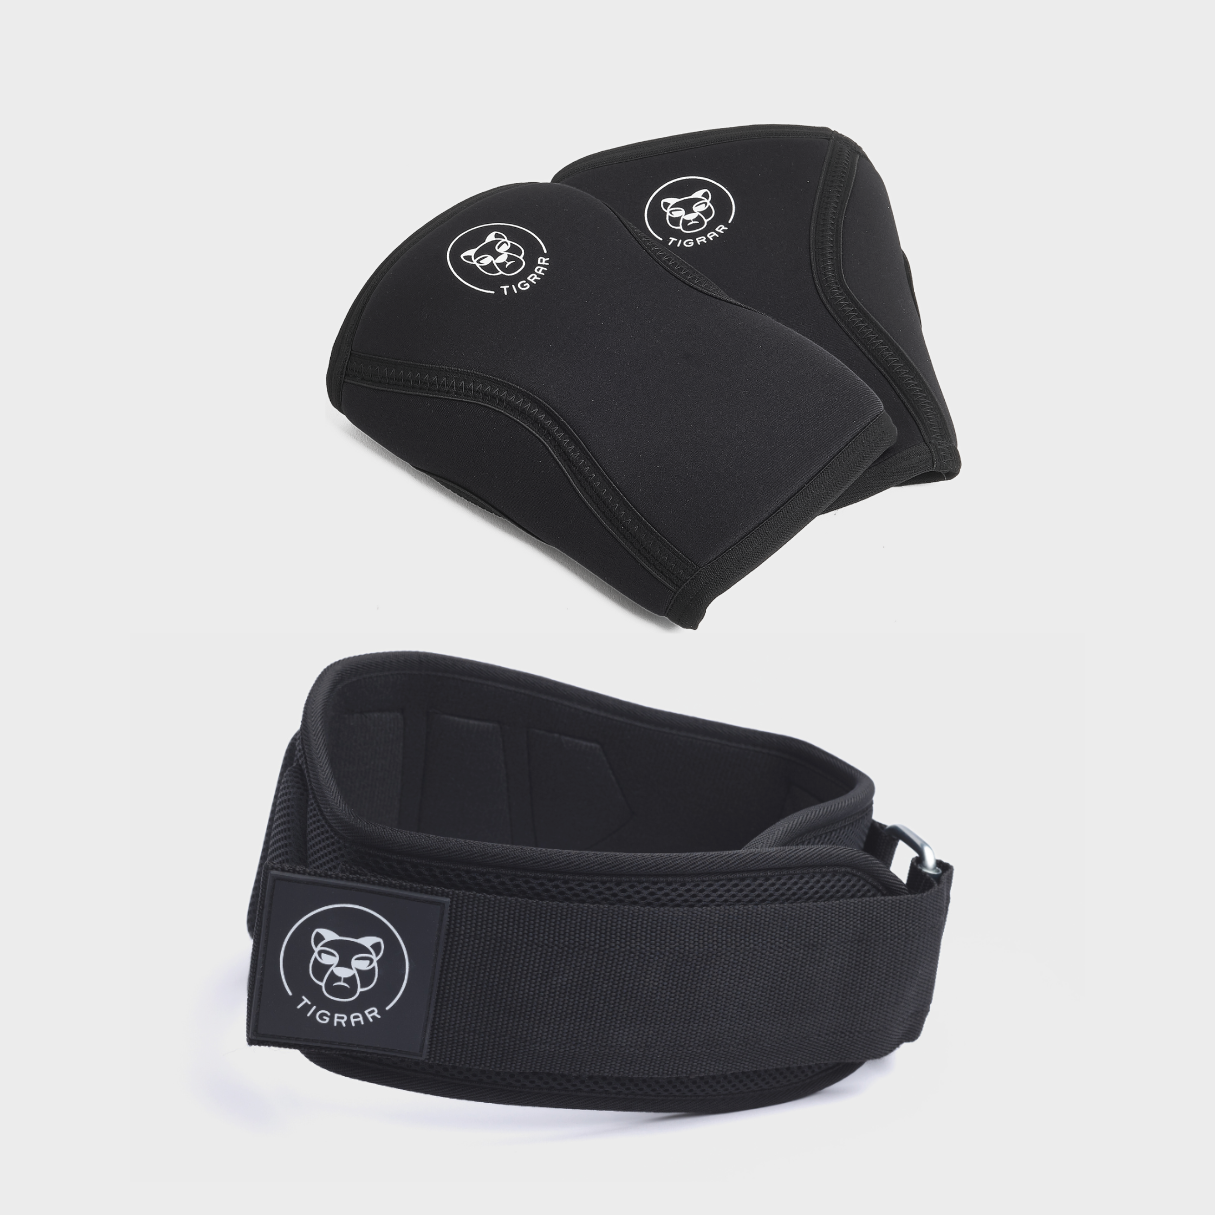 Tigrar workout essentials: Premium knee sleeves en lifting belt voor optimale prestaties.